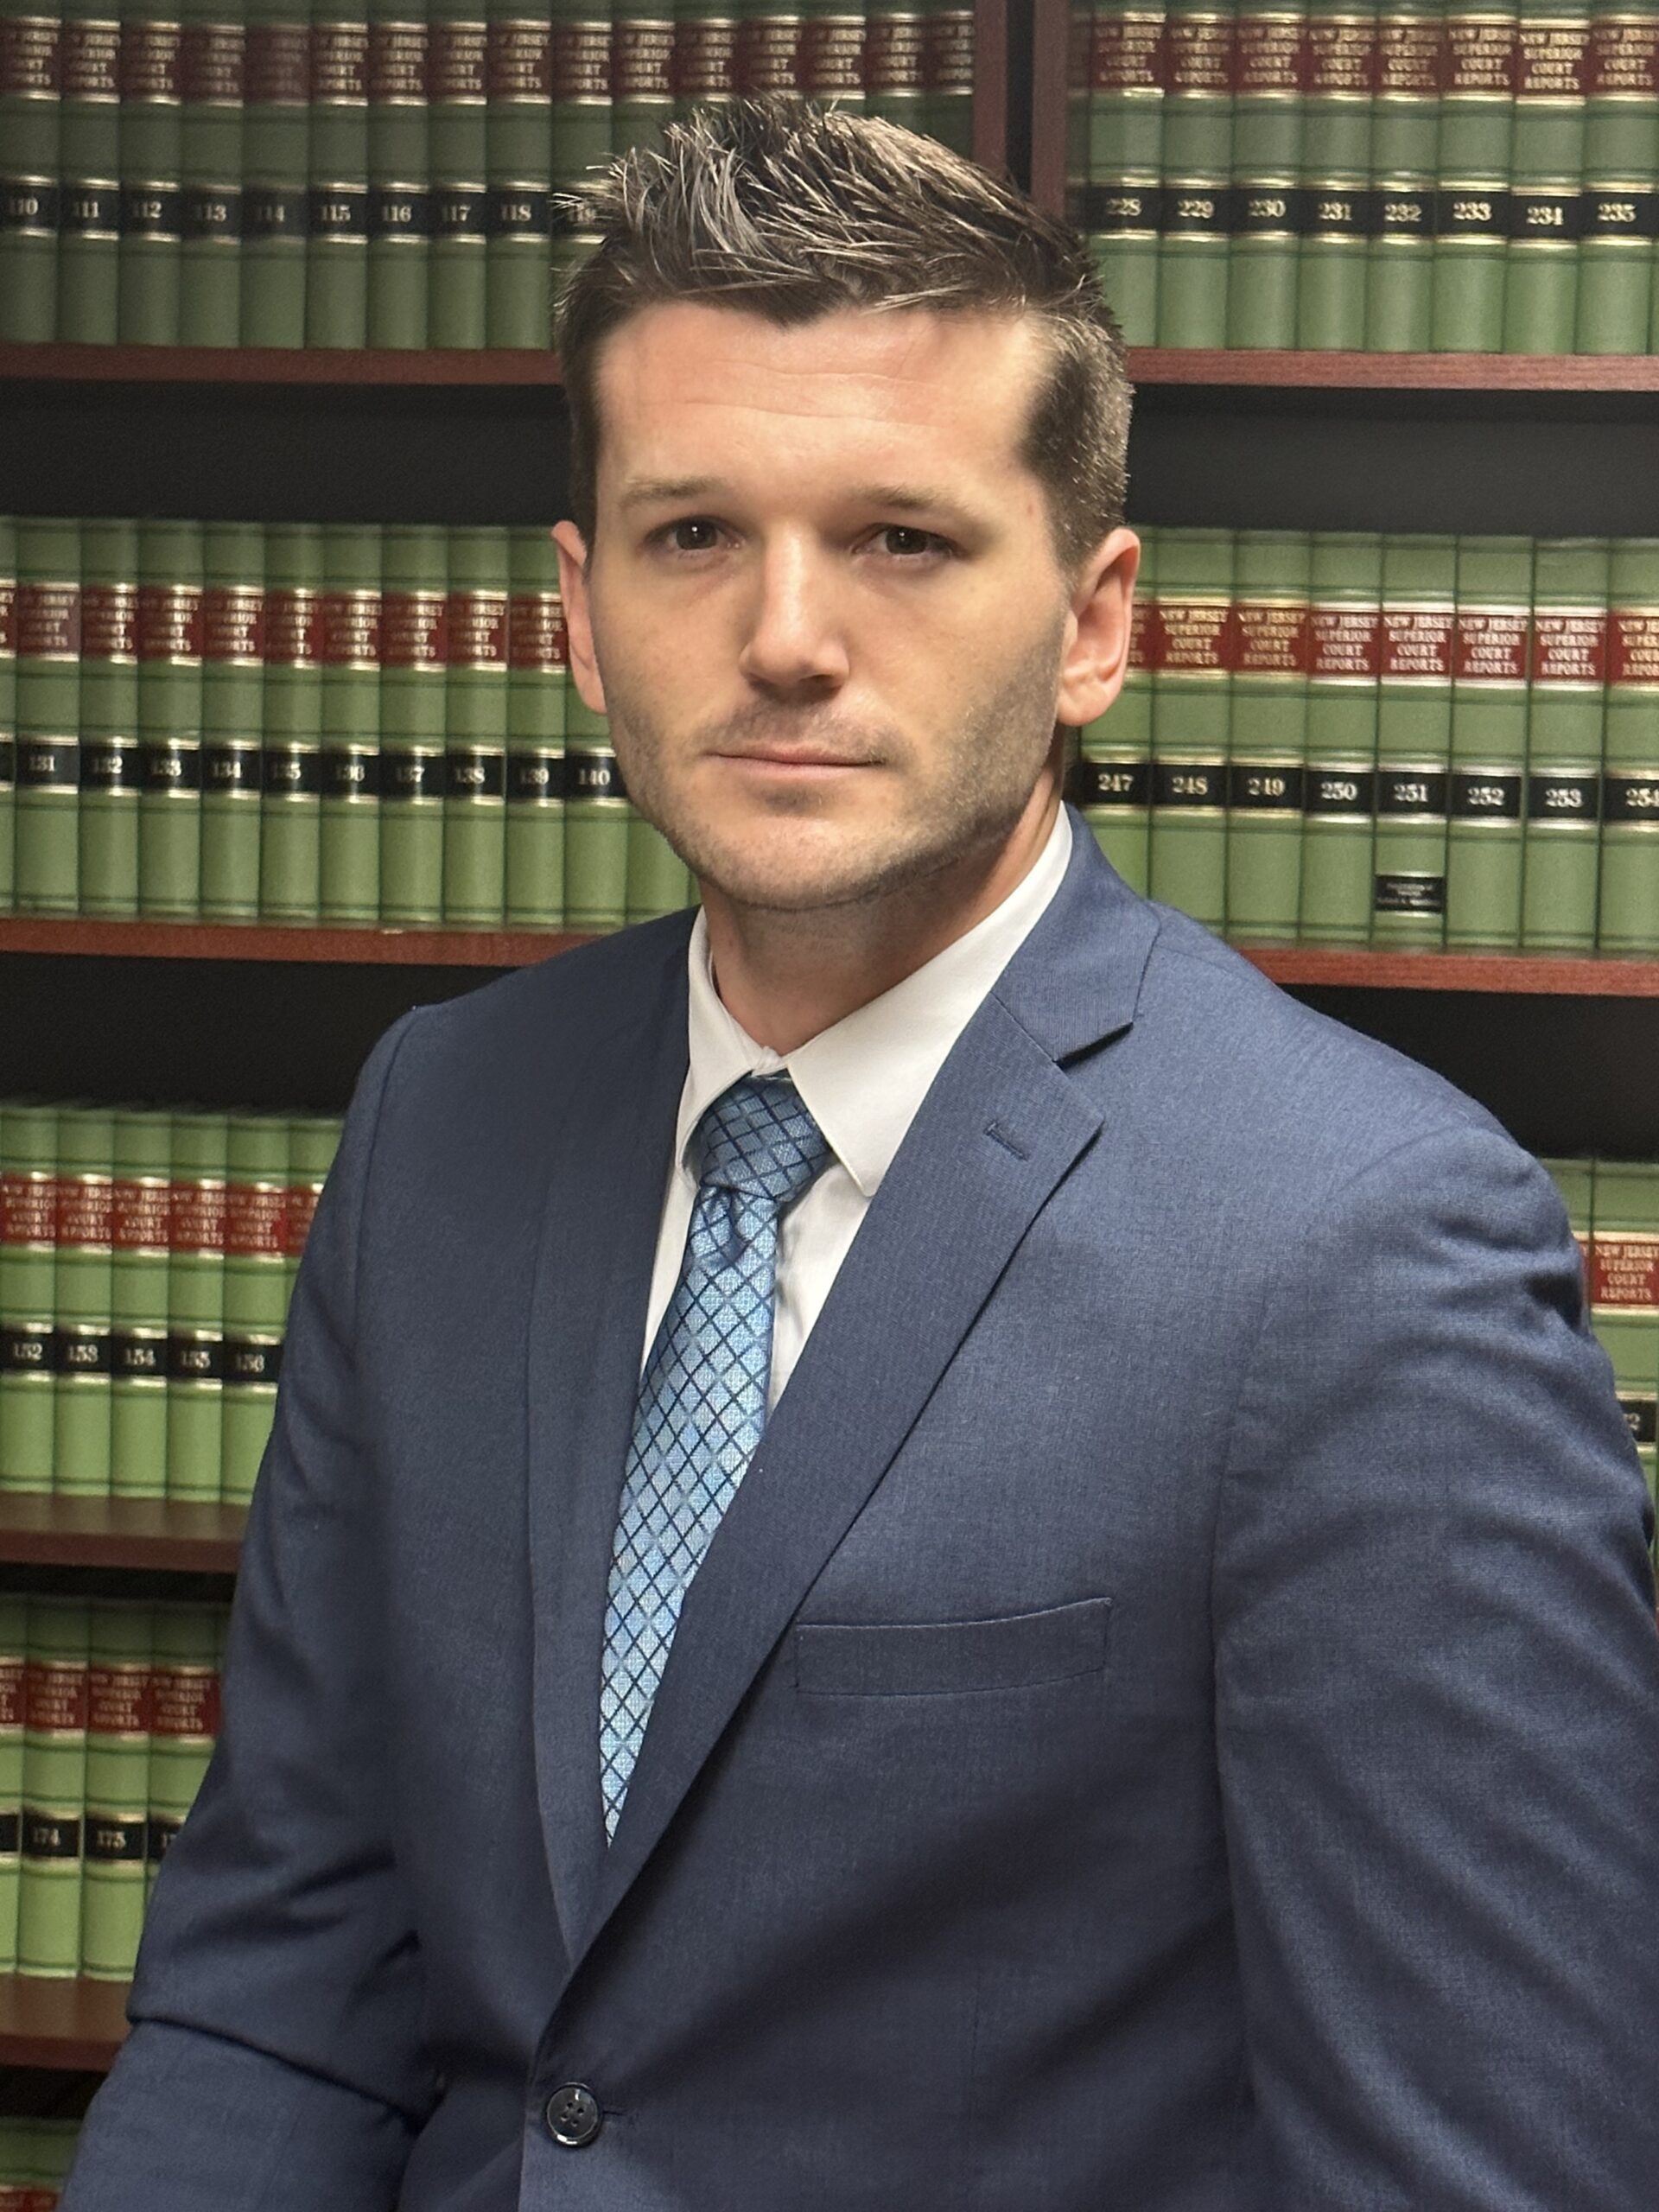 Attorney Christopher C. Harris